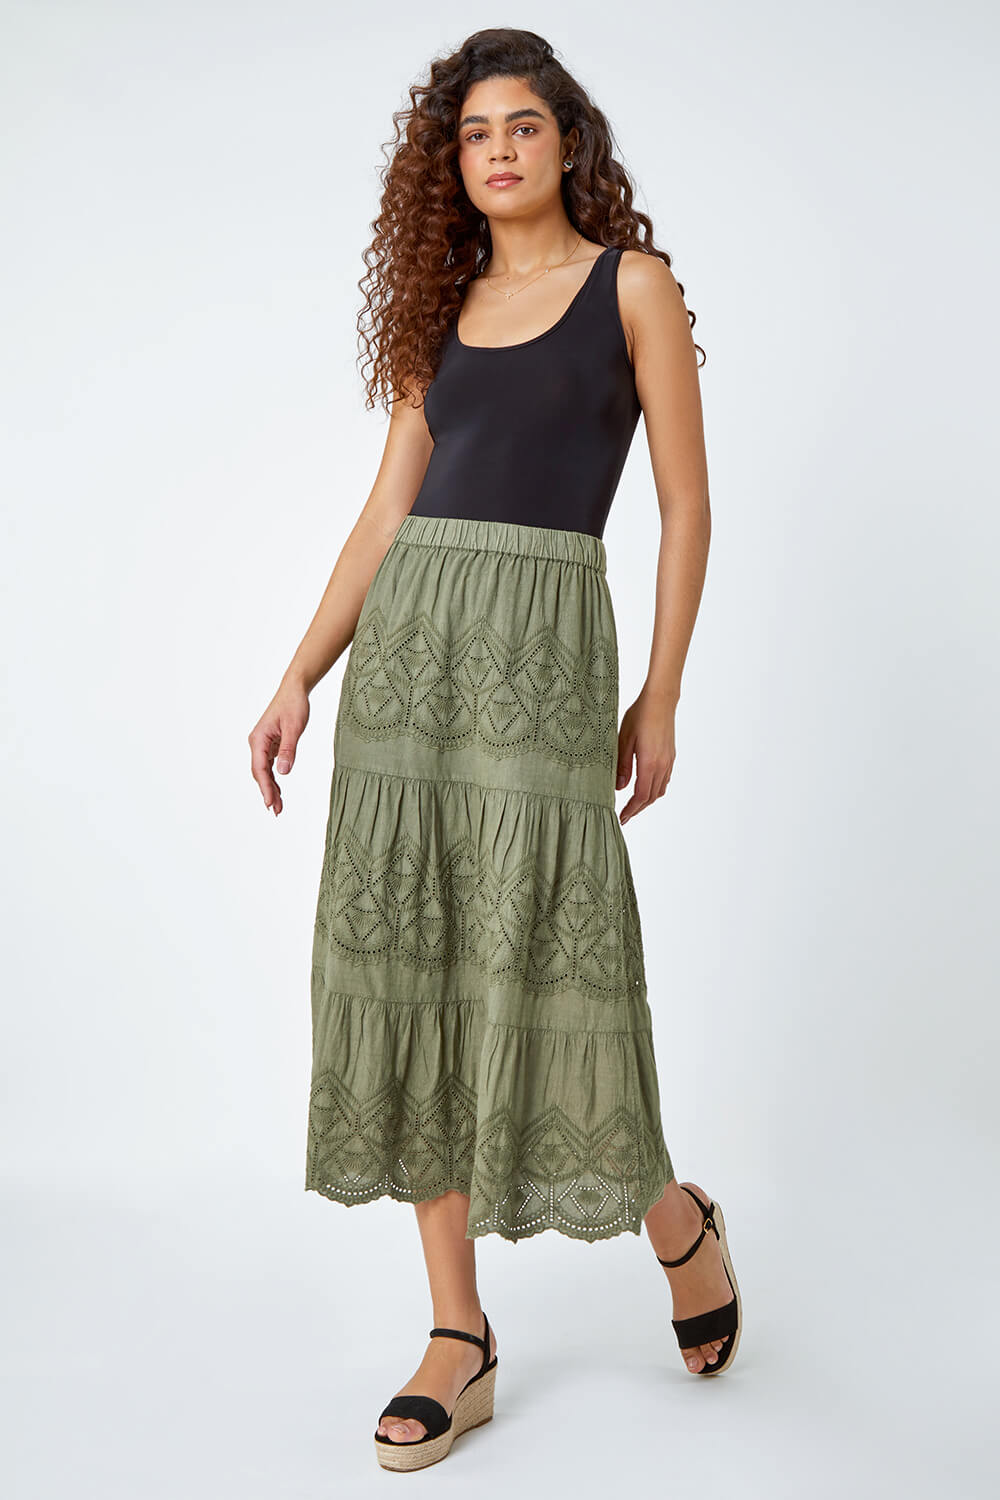 KHAKI Broderie Elastic Waist A Line Tiered Midi Skirt, Image 2 of 5